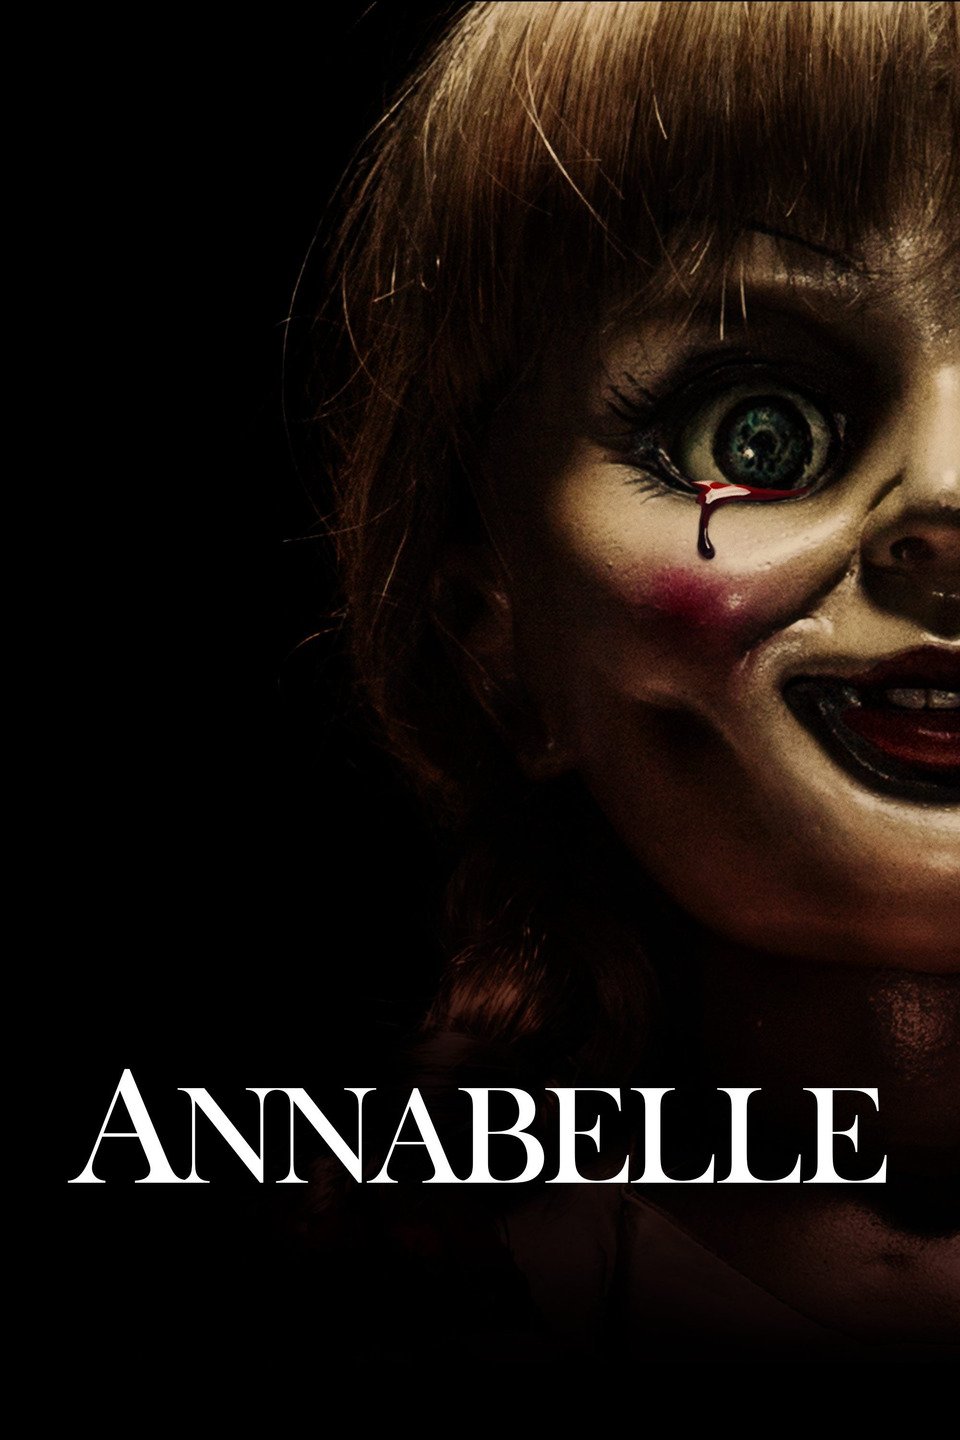 [MINI Super-HQ] Annabelle (2014) ตุ๊กตาผี [1080p] [พากย์ไทย 5.1 + เสียงอังกฤษ DTS] [บรรยายไทย + อังกฤษ] [เสียงไทย + ซับไทย] [OPENLOAD]